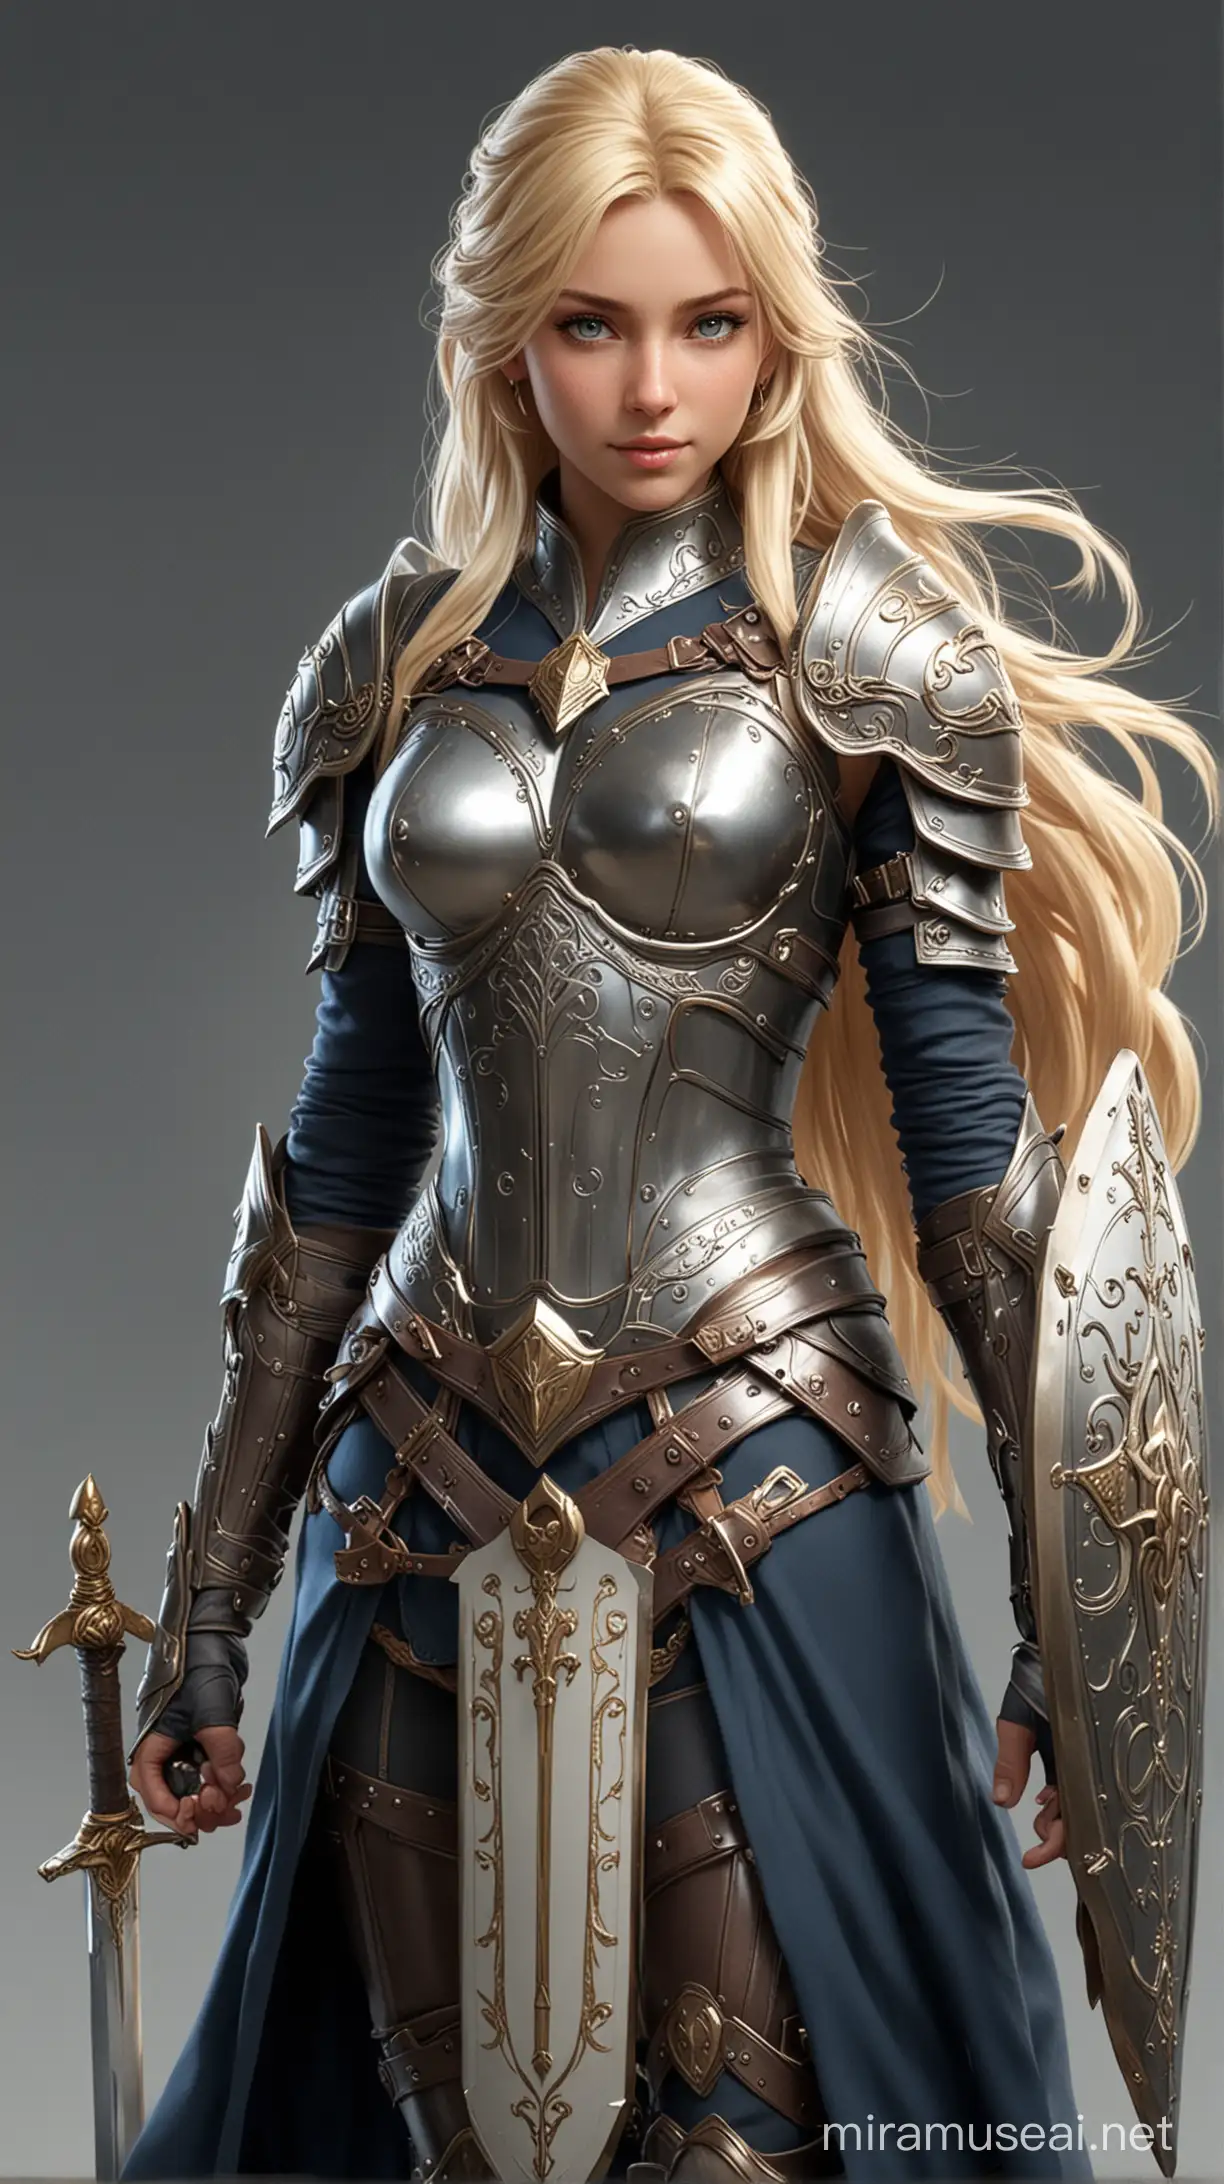 Hirelia Adventurous Warrior with Elegant Armor and Sword